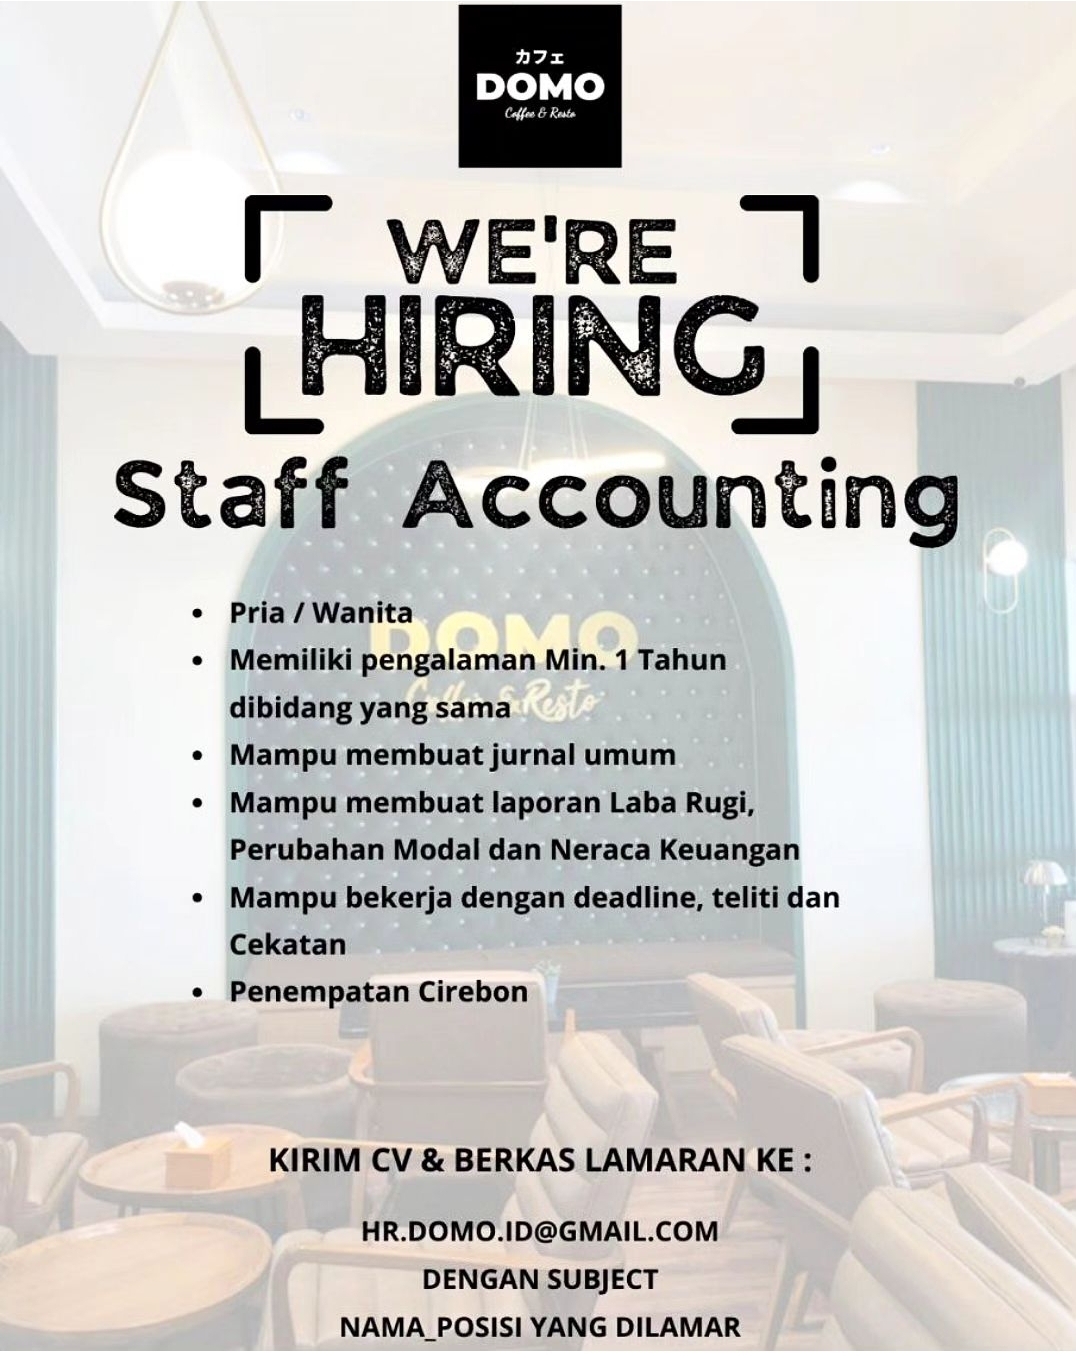 Lowongan Kerja Staff Accounting Domo Coffee & Resto Cirebon